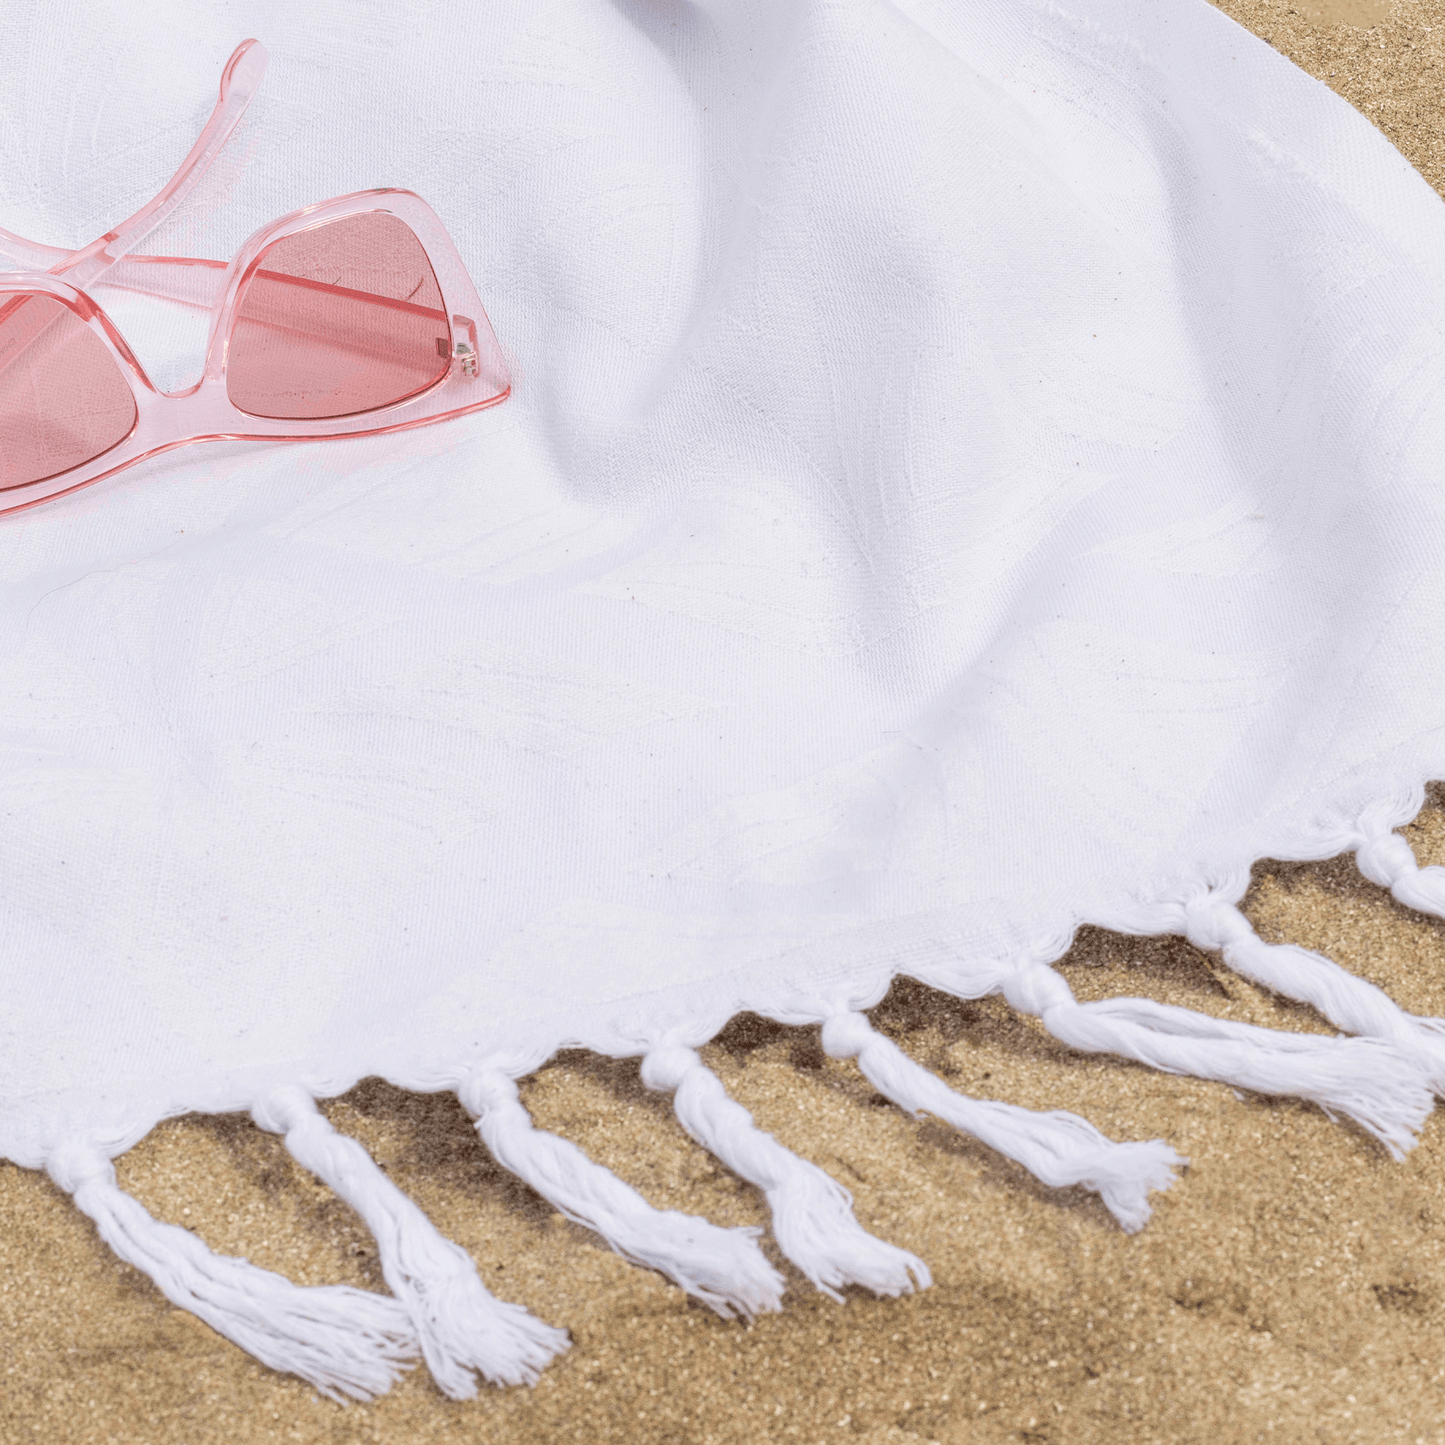 White Turkish towel at the beach